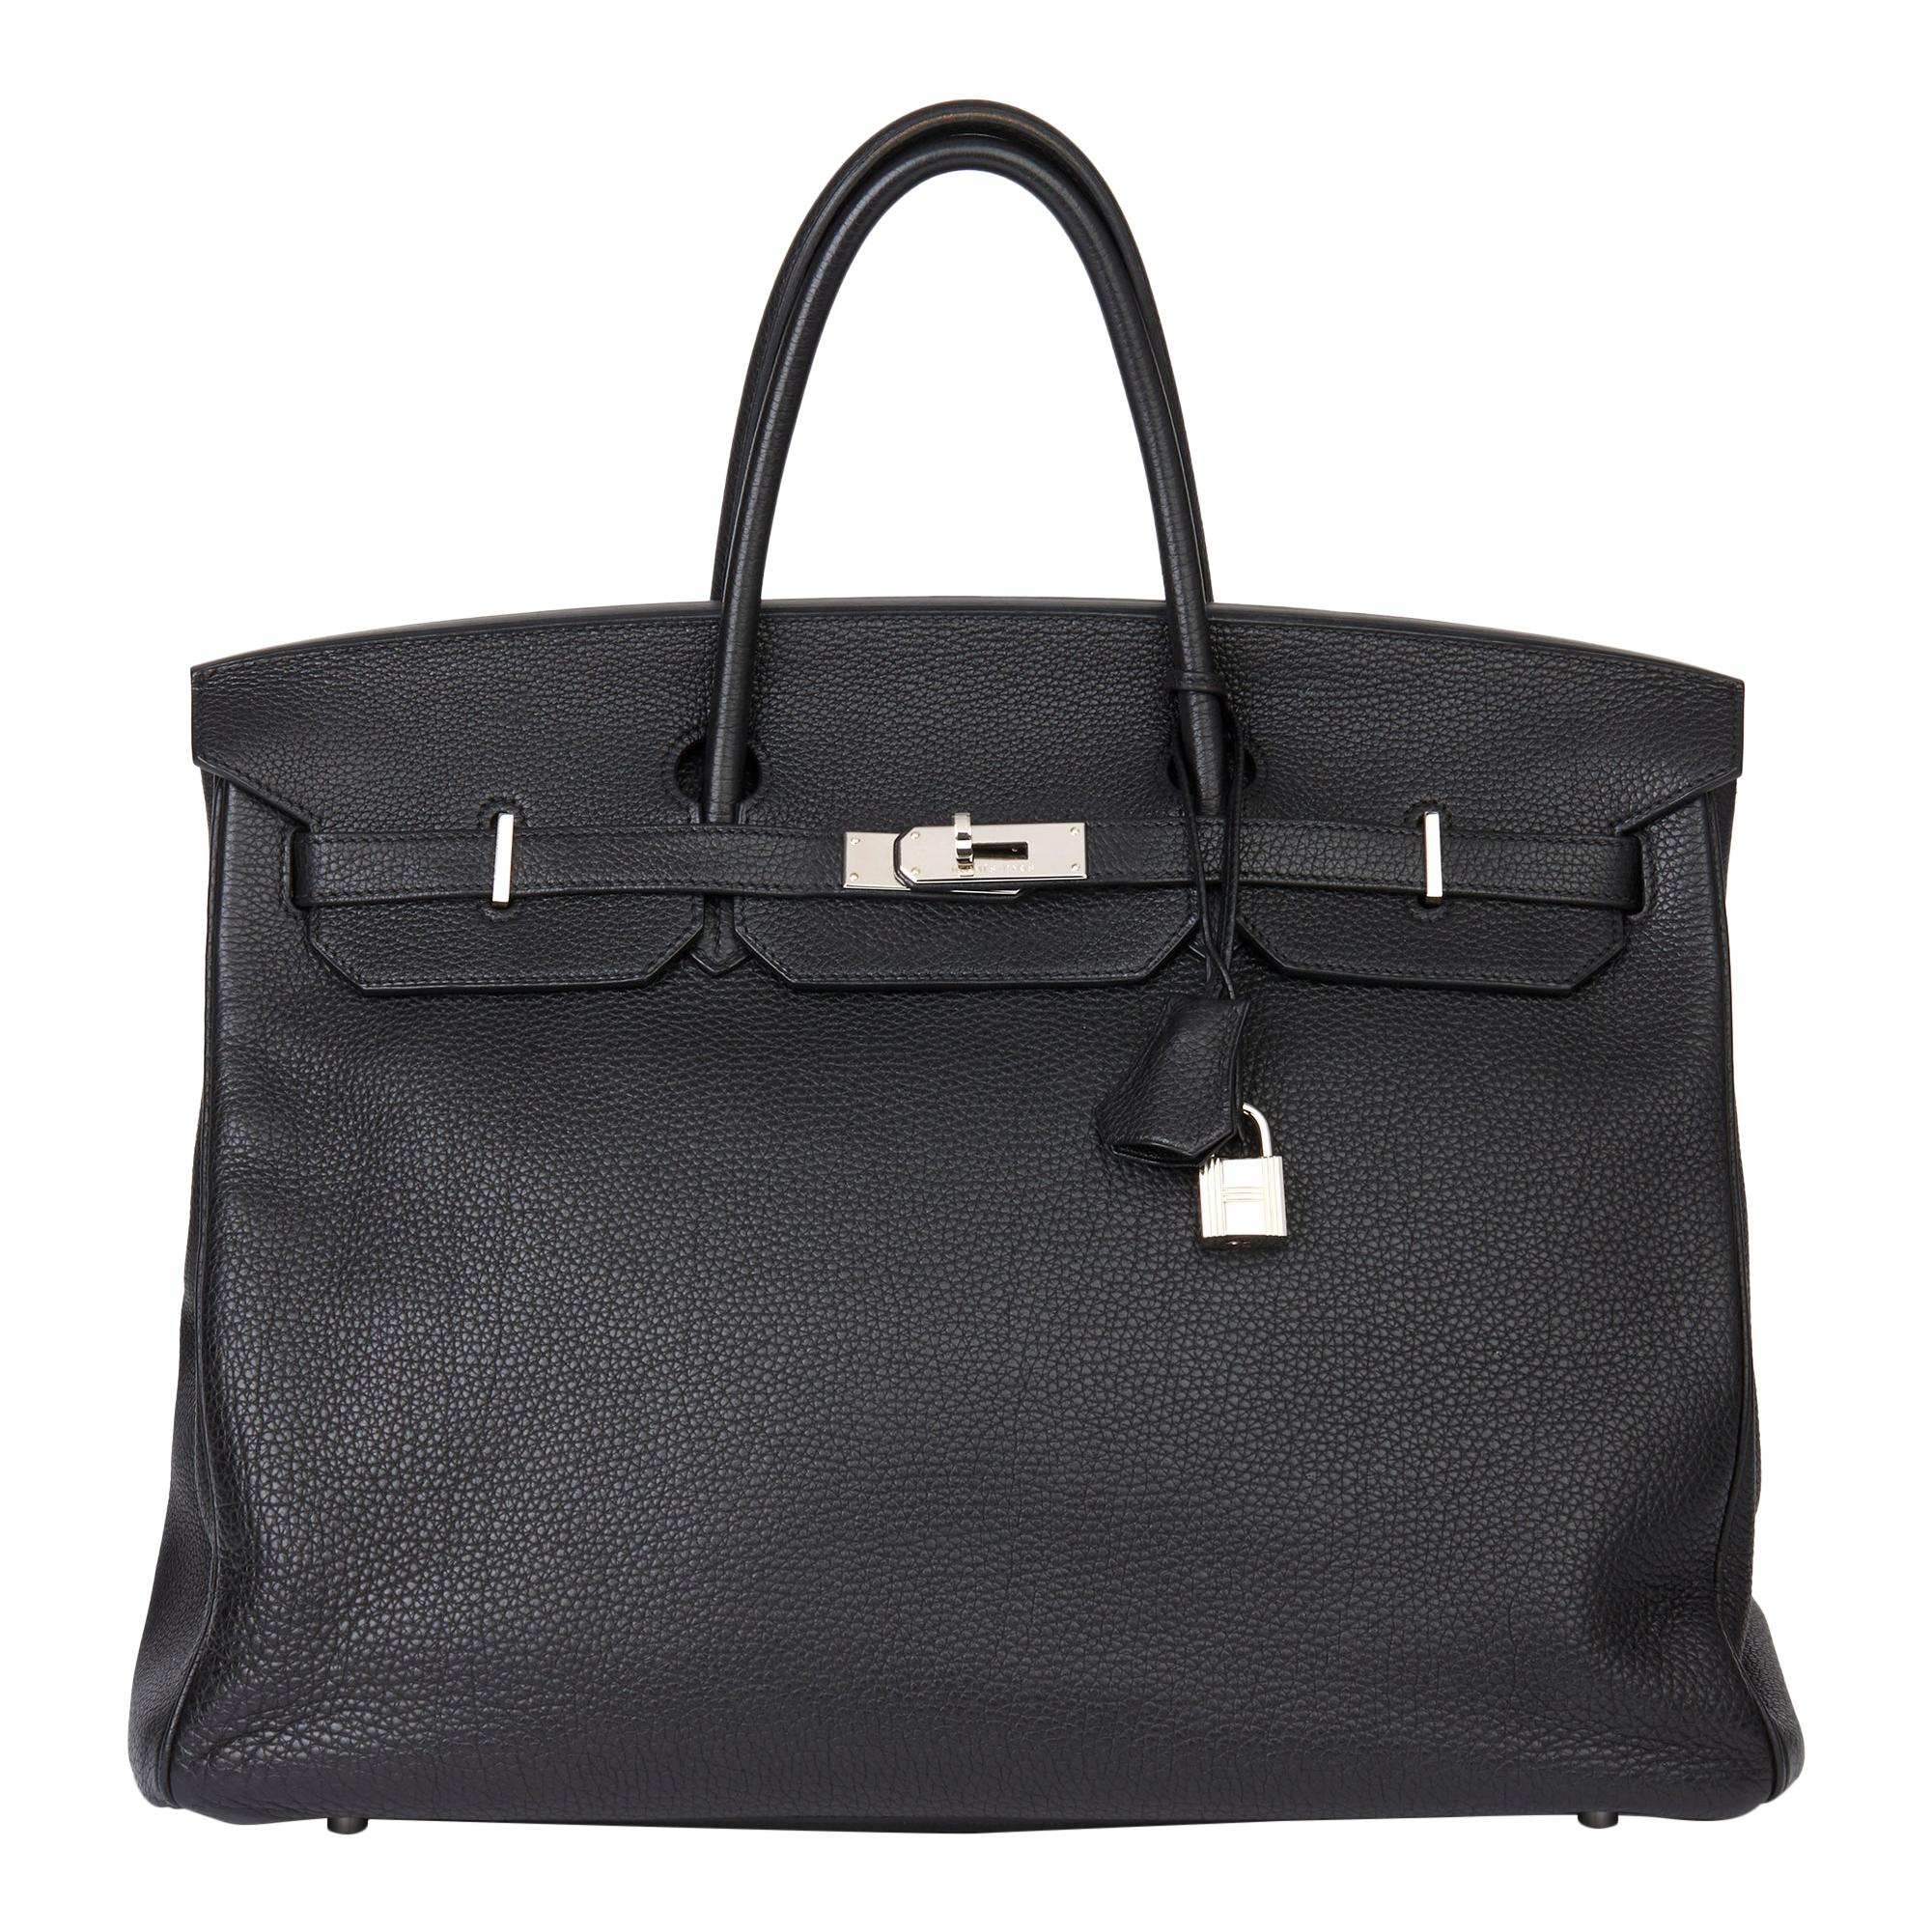 2010 Hermès Black Togo Leather Birkin 40cm